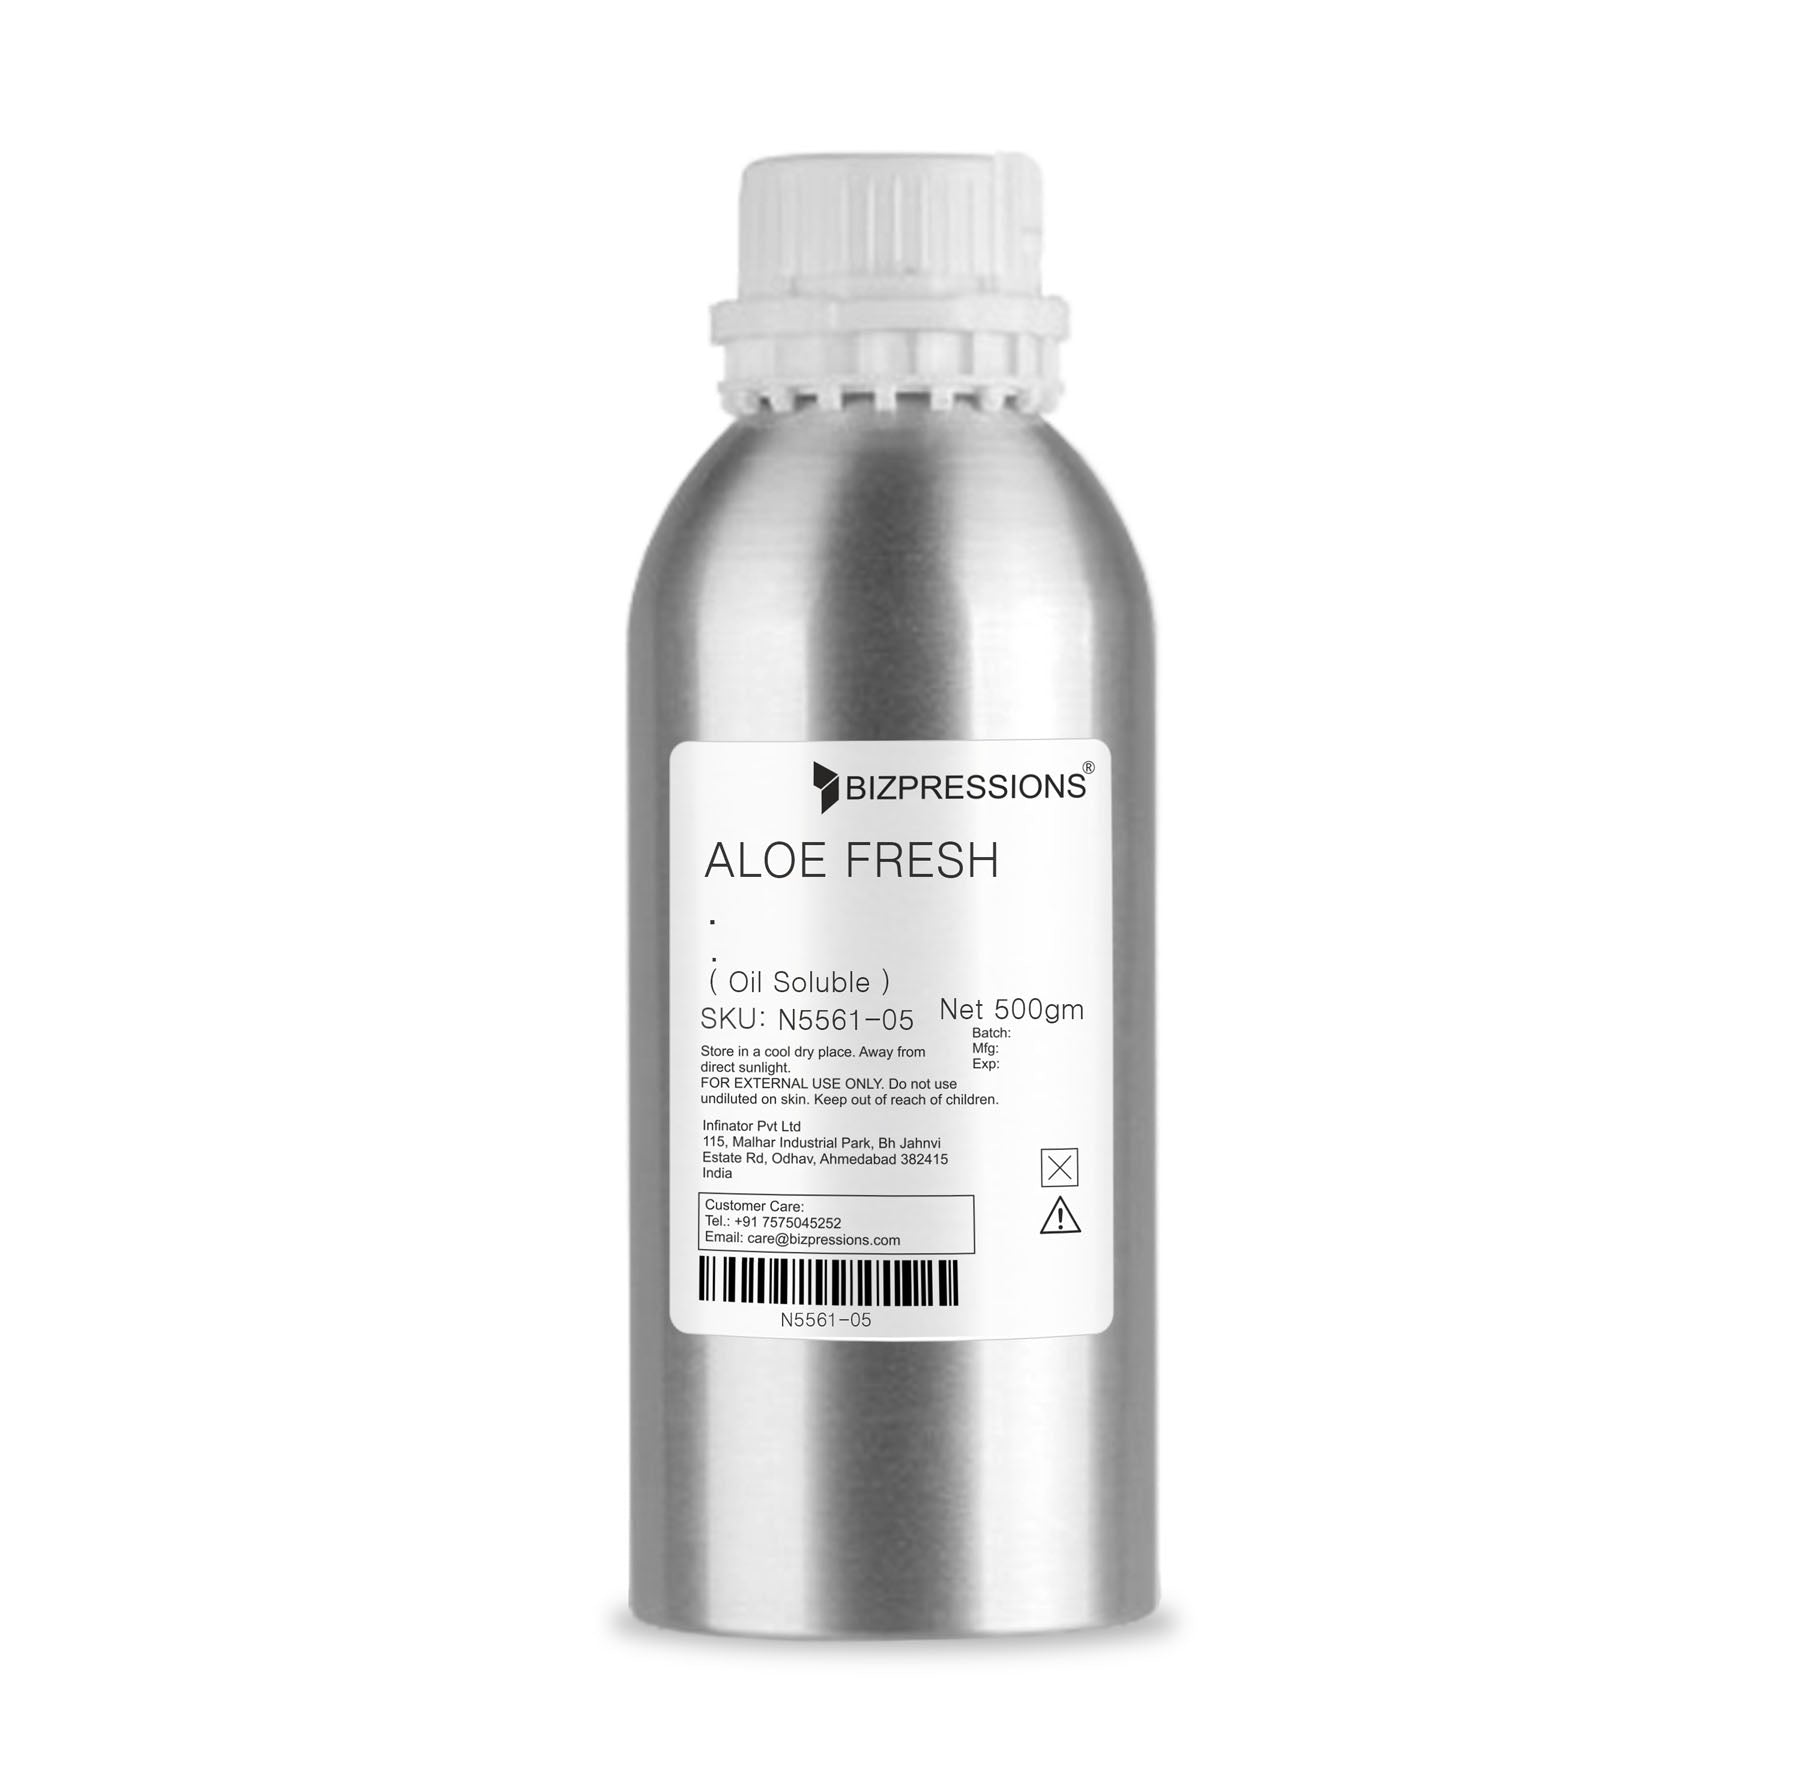 ALOE FRESH - Fragrance ( Oil Soluble ) - 500 gm